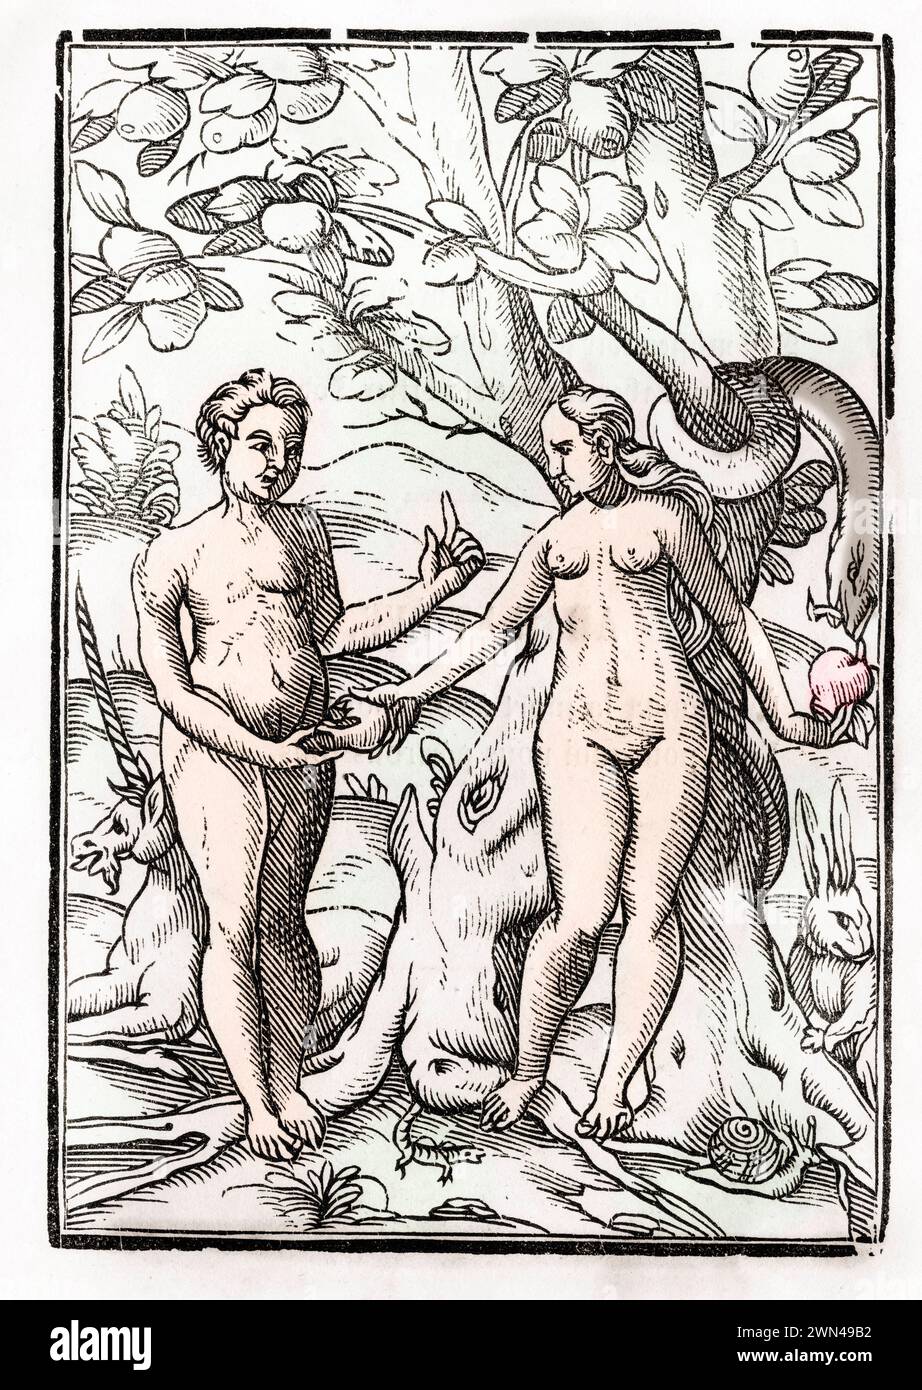 Adam und Eva im Garten Eden Aus Der Todten Tanz oder la danse de la mort erschienen à Bâle 1843 / Adam et Eve dans le jardin d'Eden de Der Todten Banque D'Images